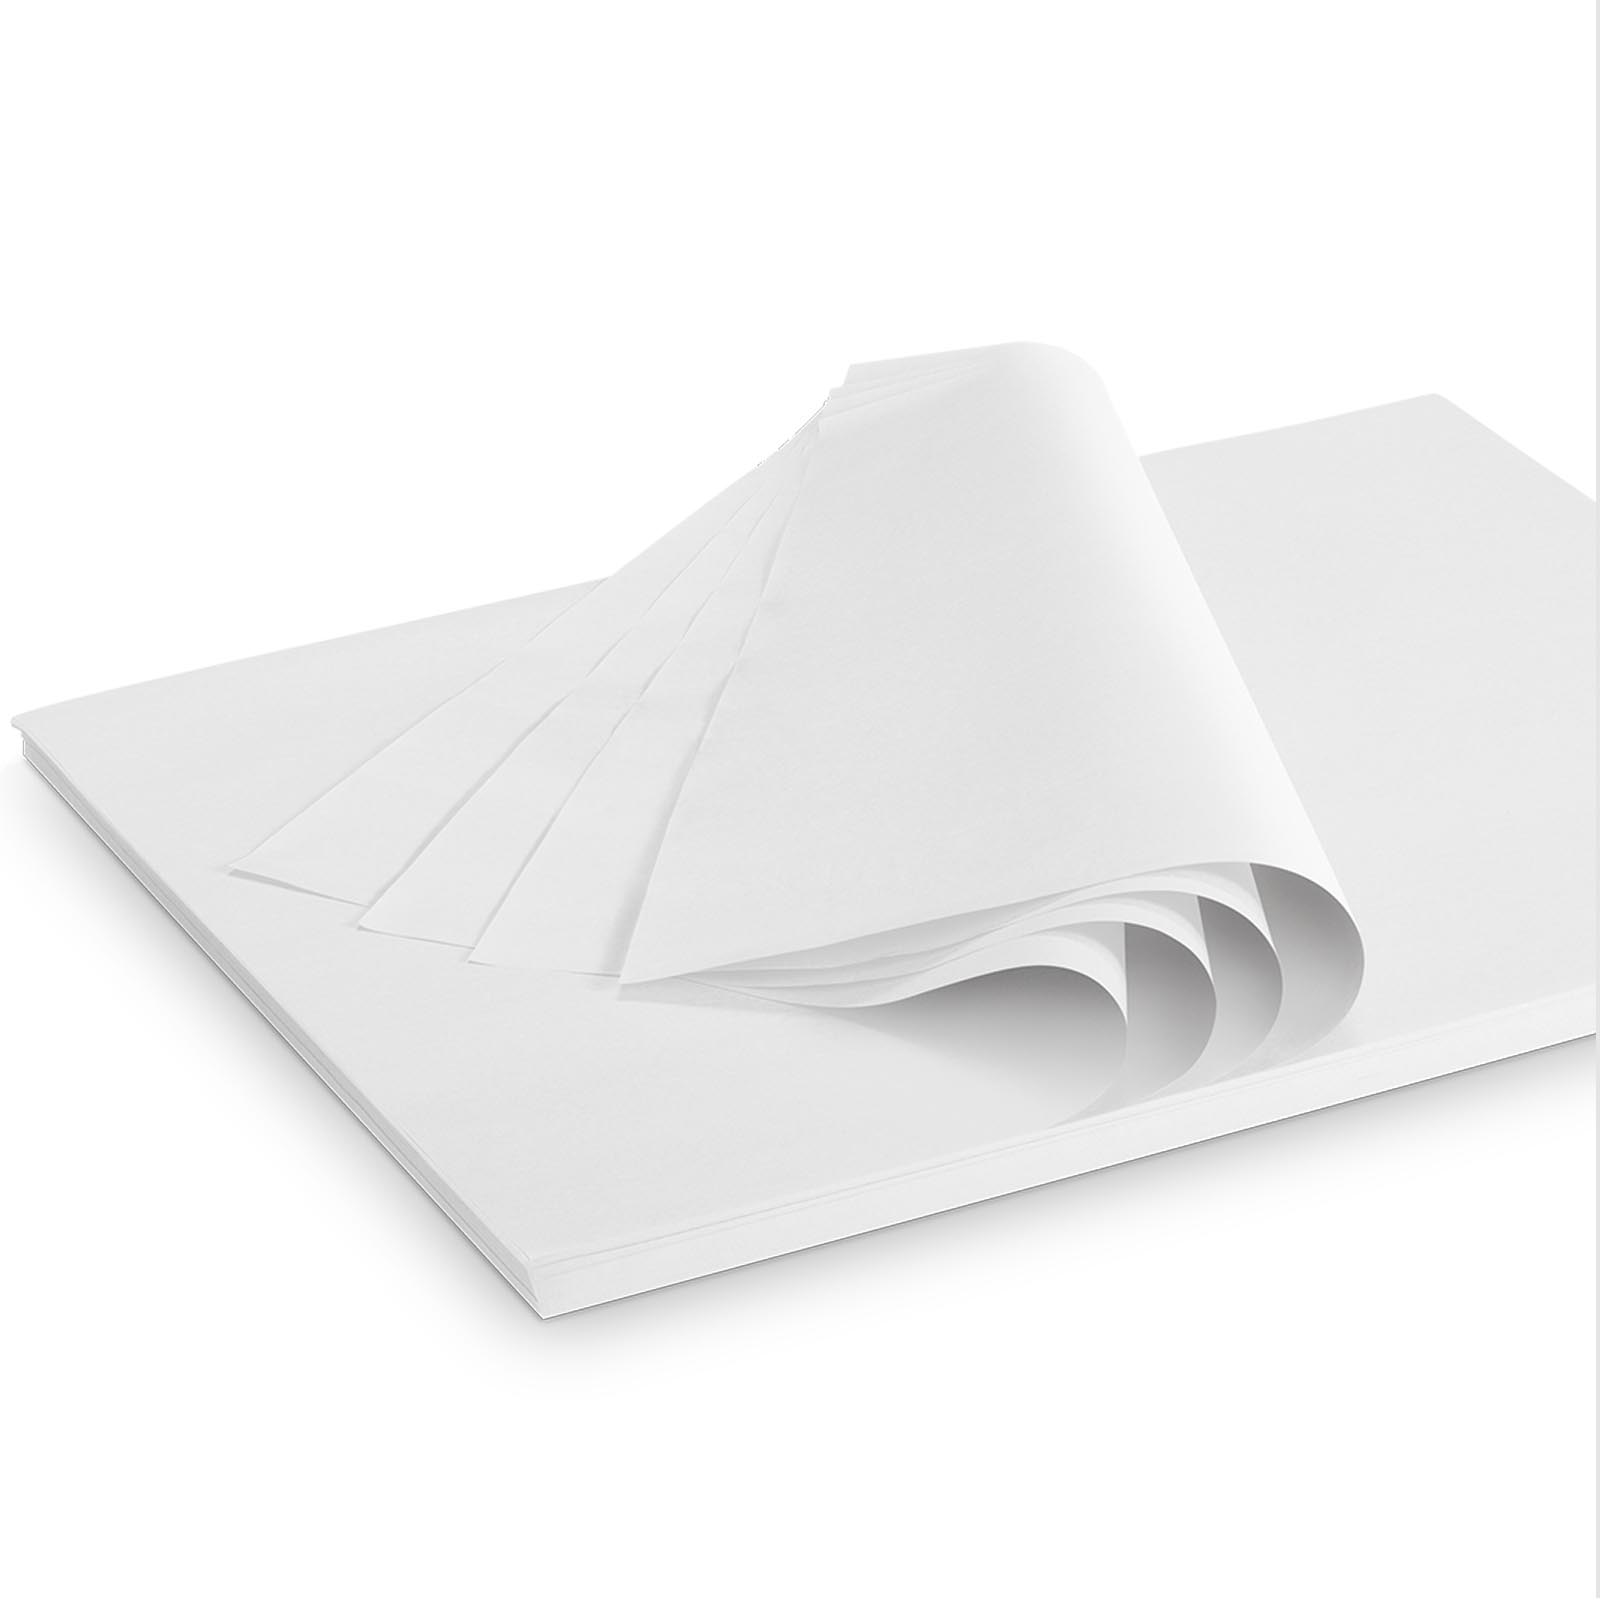 Seidenpapier weiß 28g/qm 500x375mm 2 kg/ ca.380 Blatt